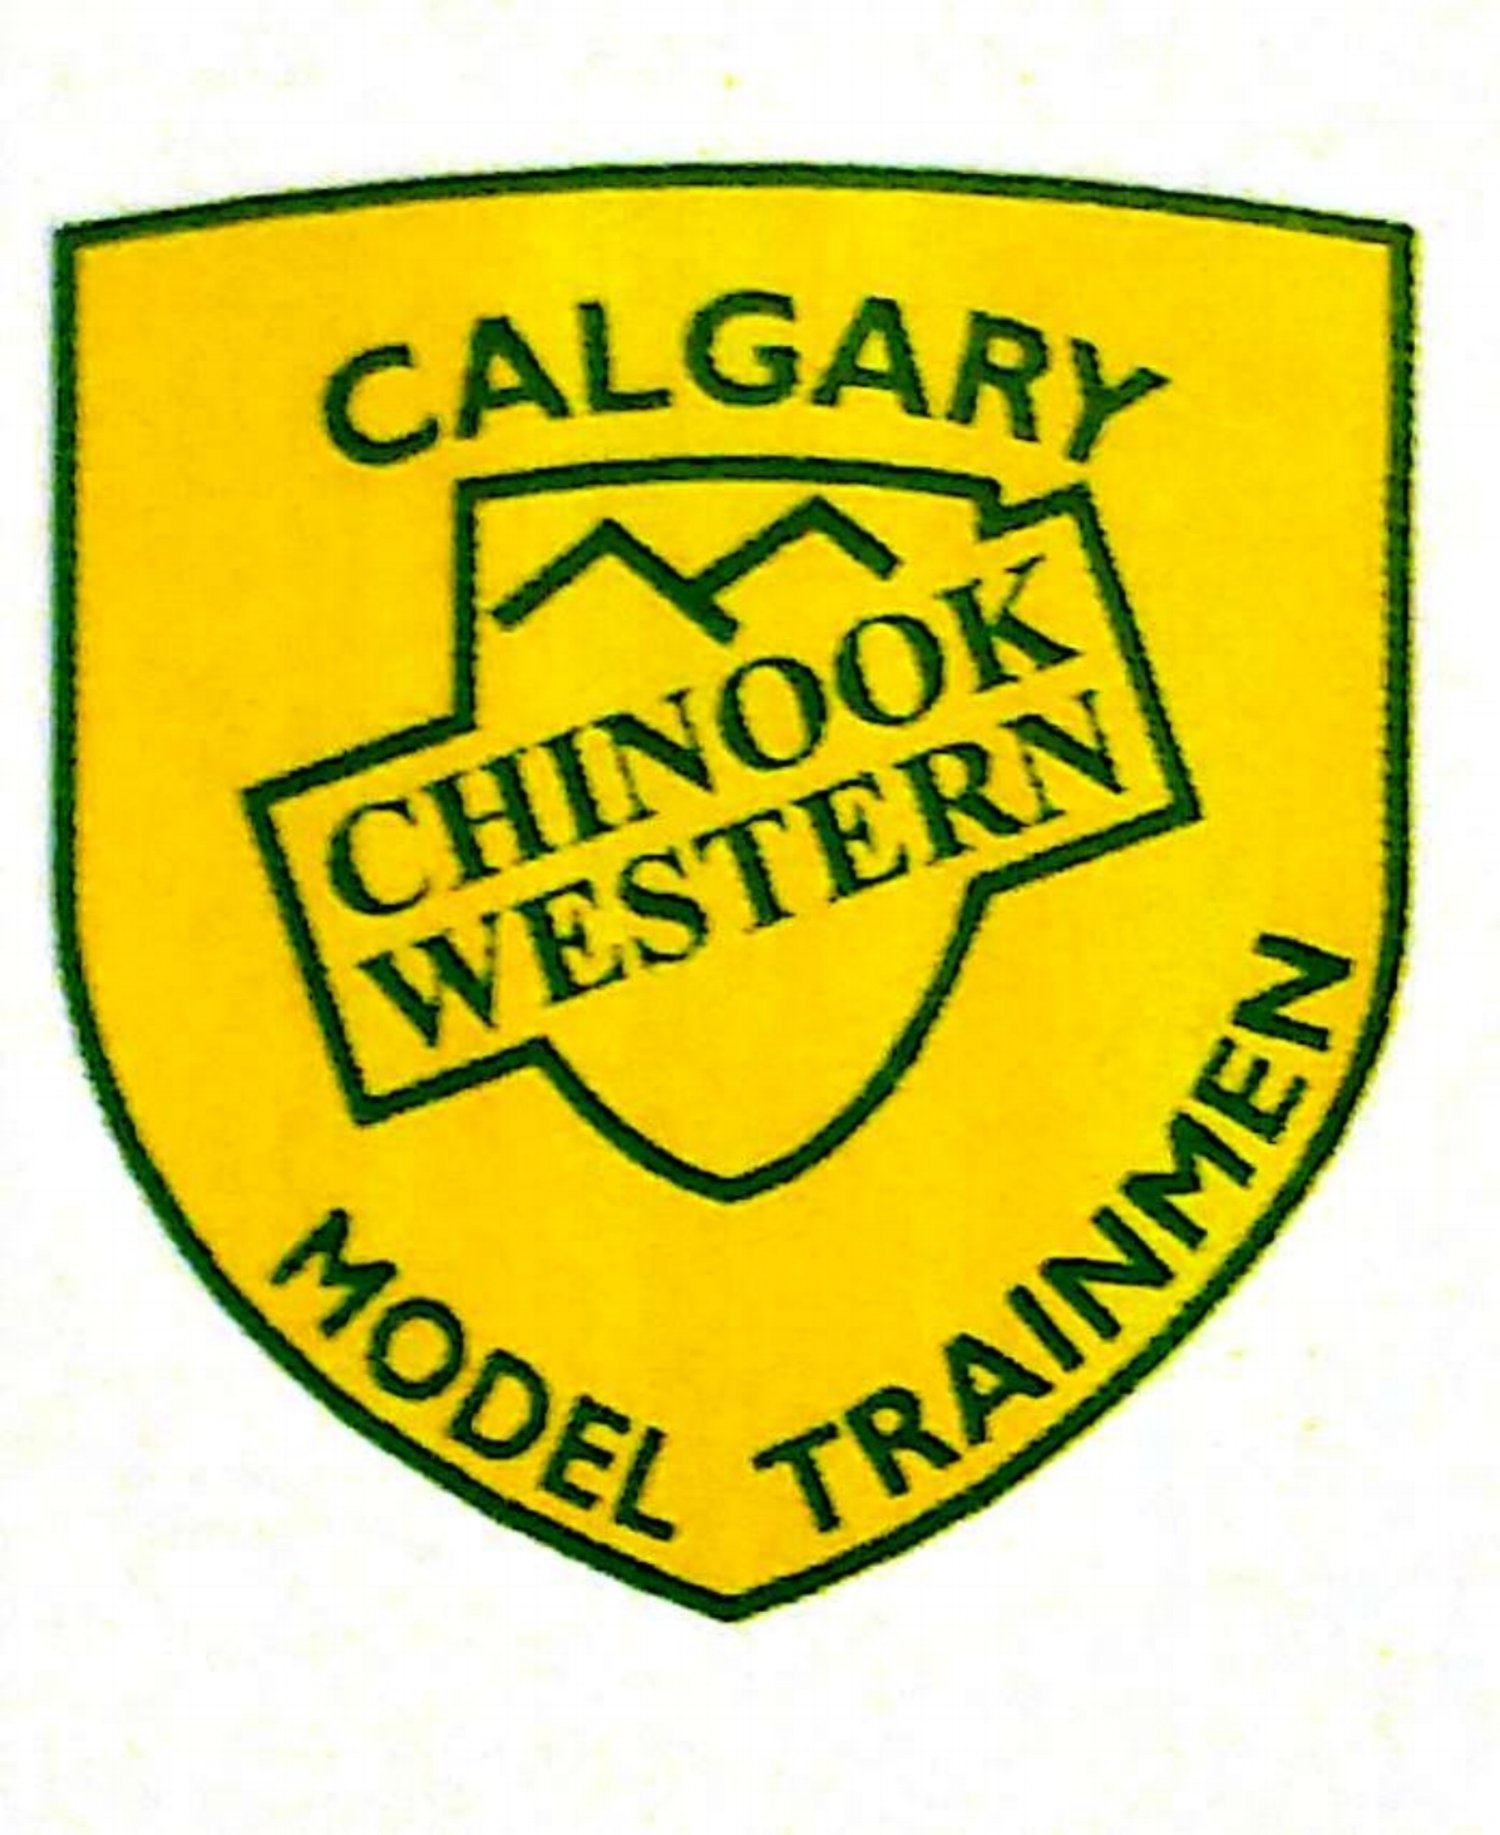 Calgary Model Trainmen